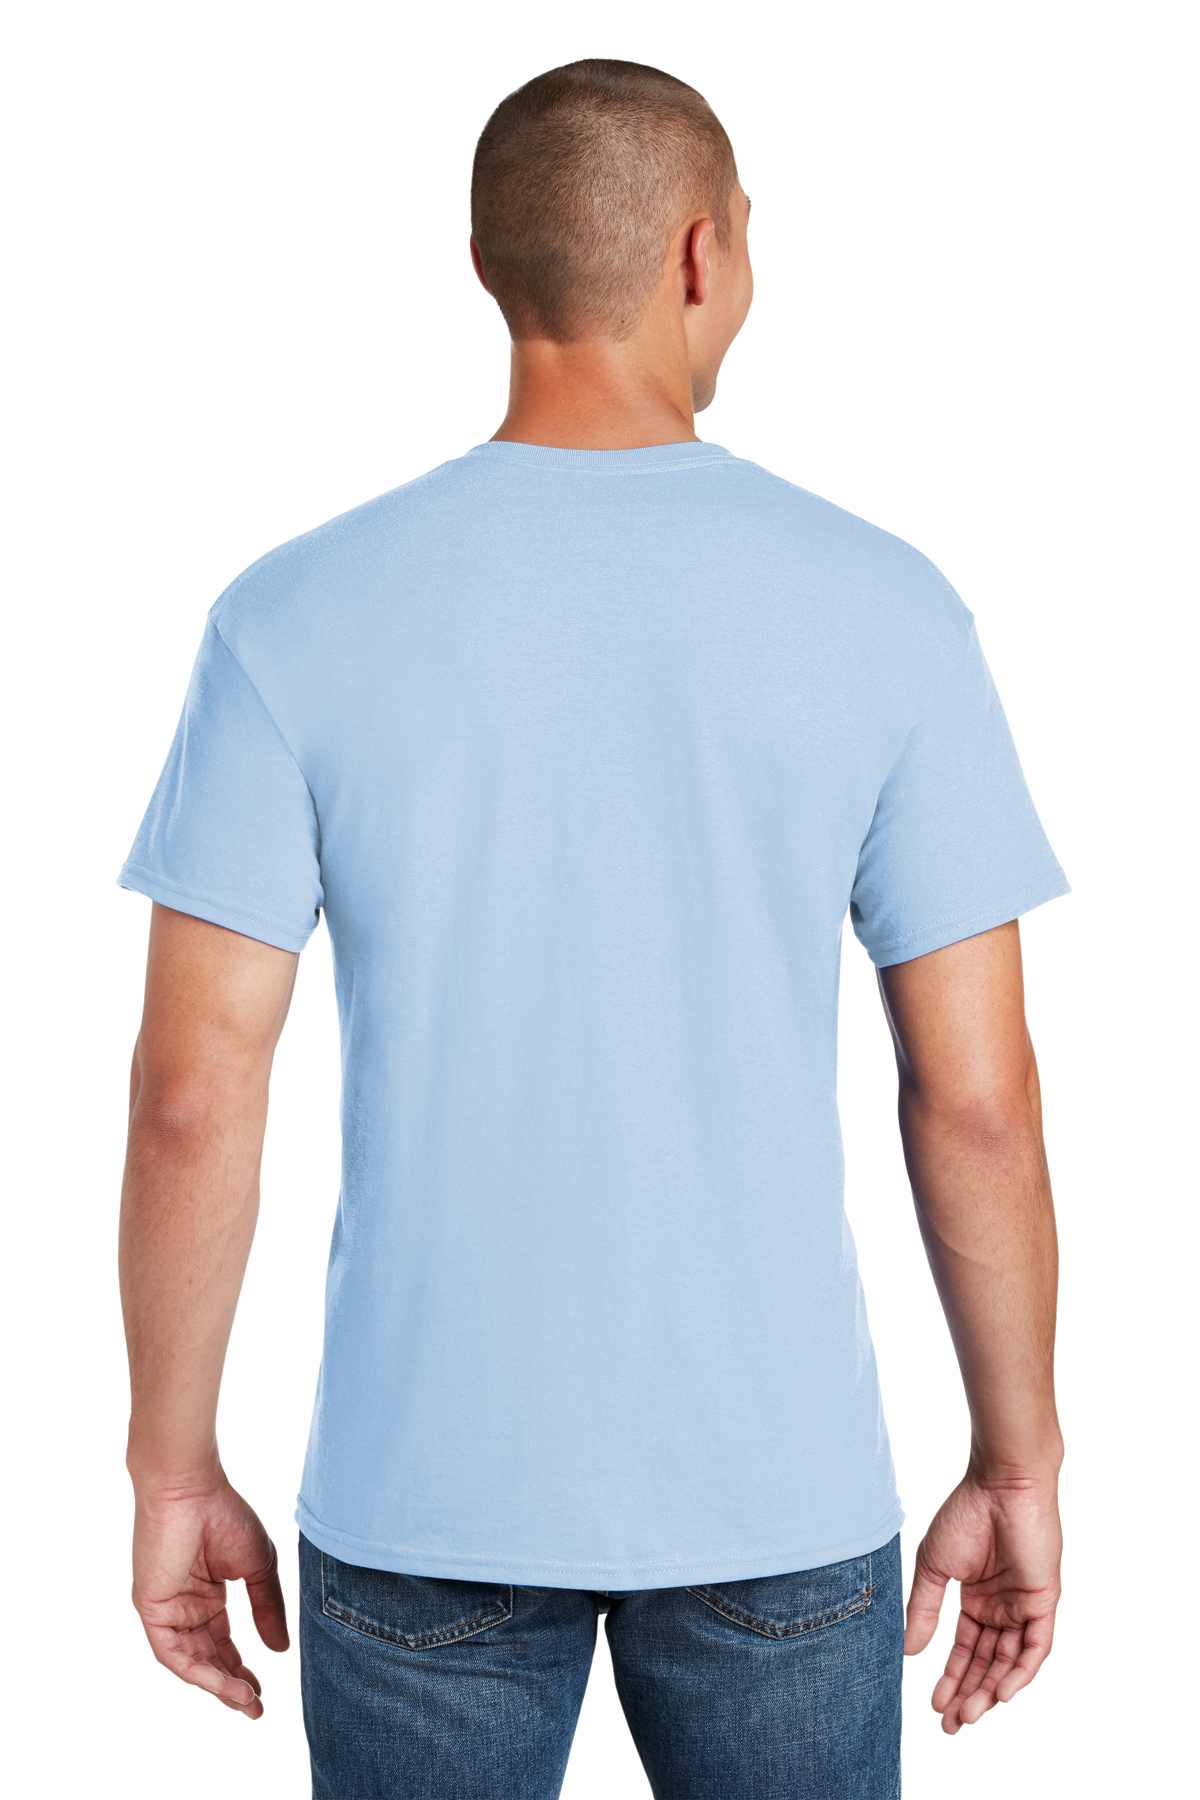 Vellykket min Forbedring Gildan - DryBlend 50 Cotton/50 Poly T-Shirt | Product | SanMar